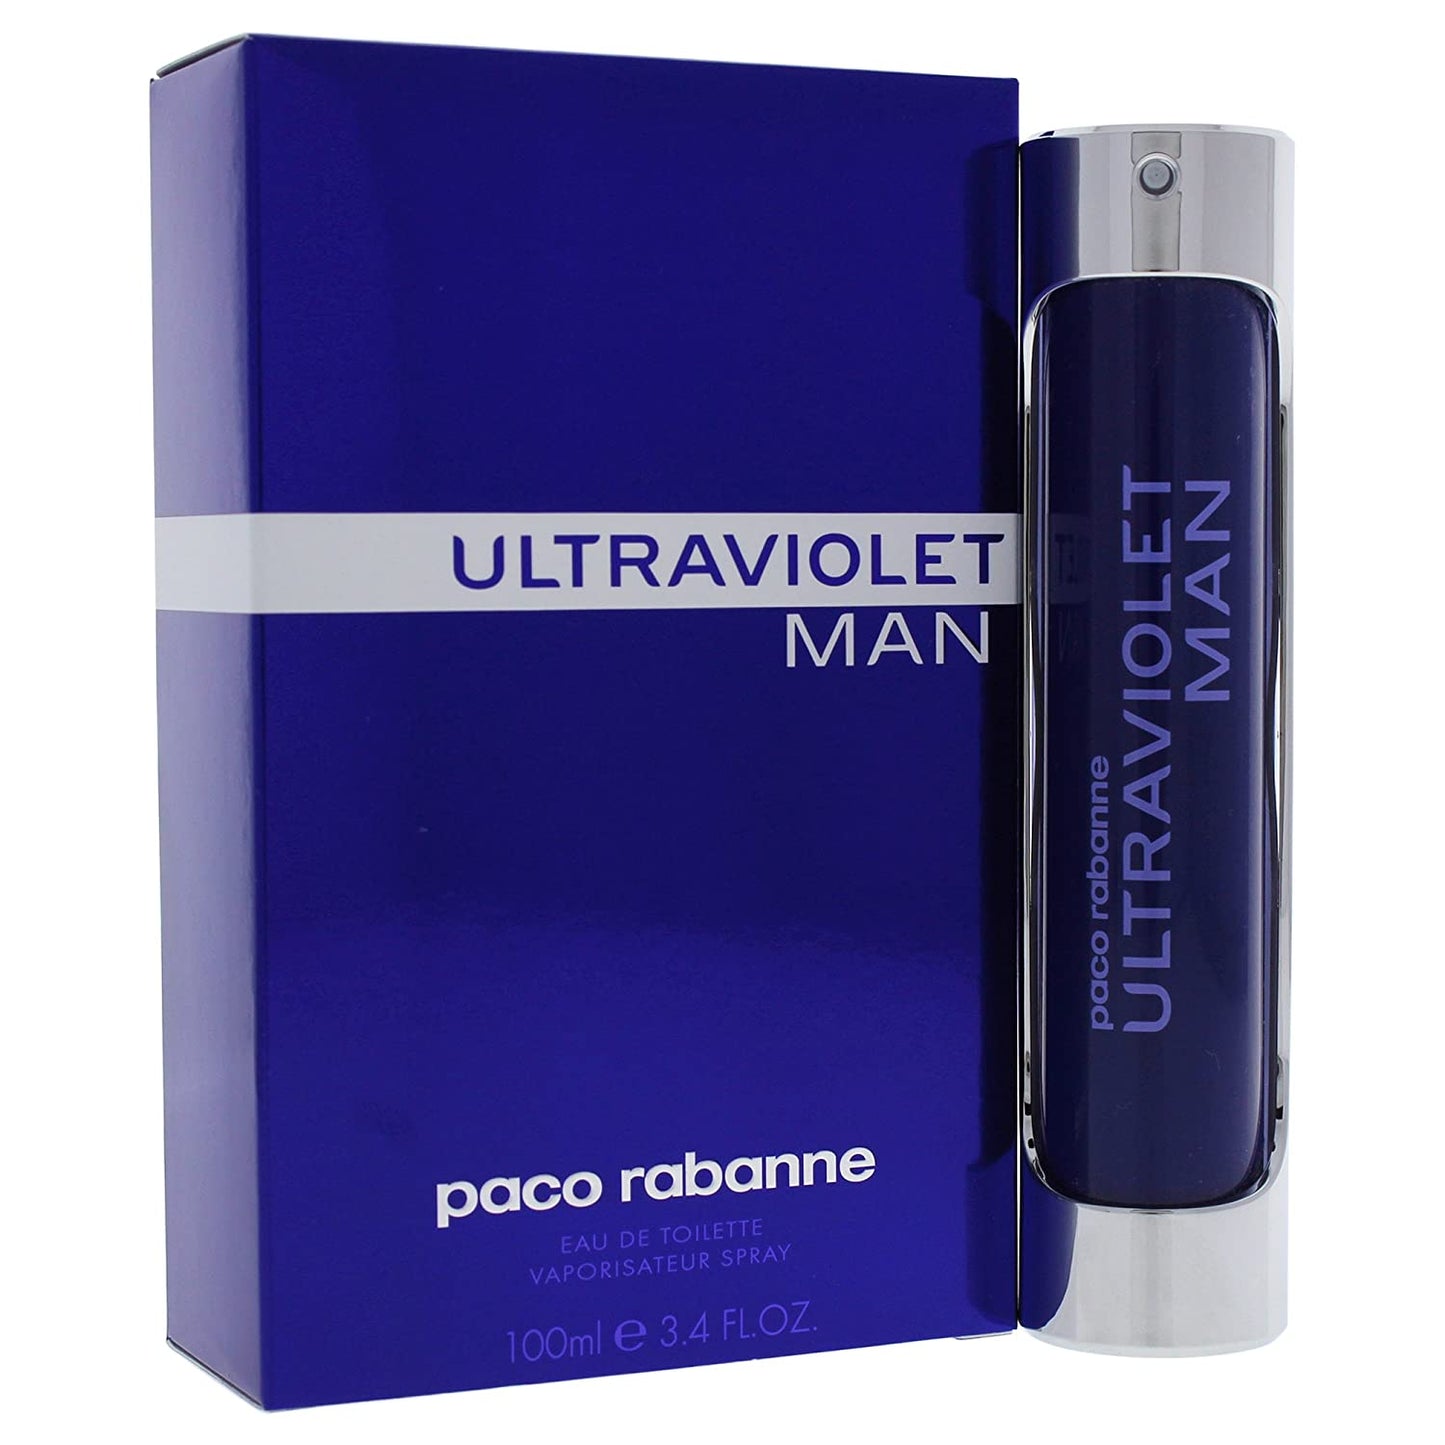 Ultraviolet Man by Paco Rabanne (3.3 oz)